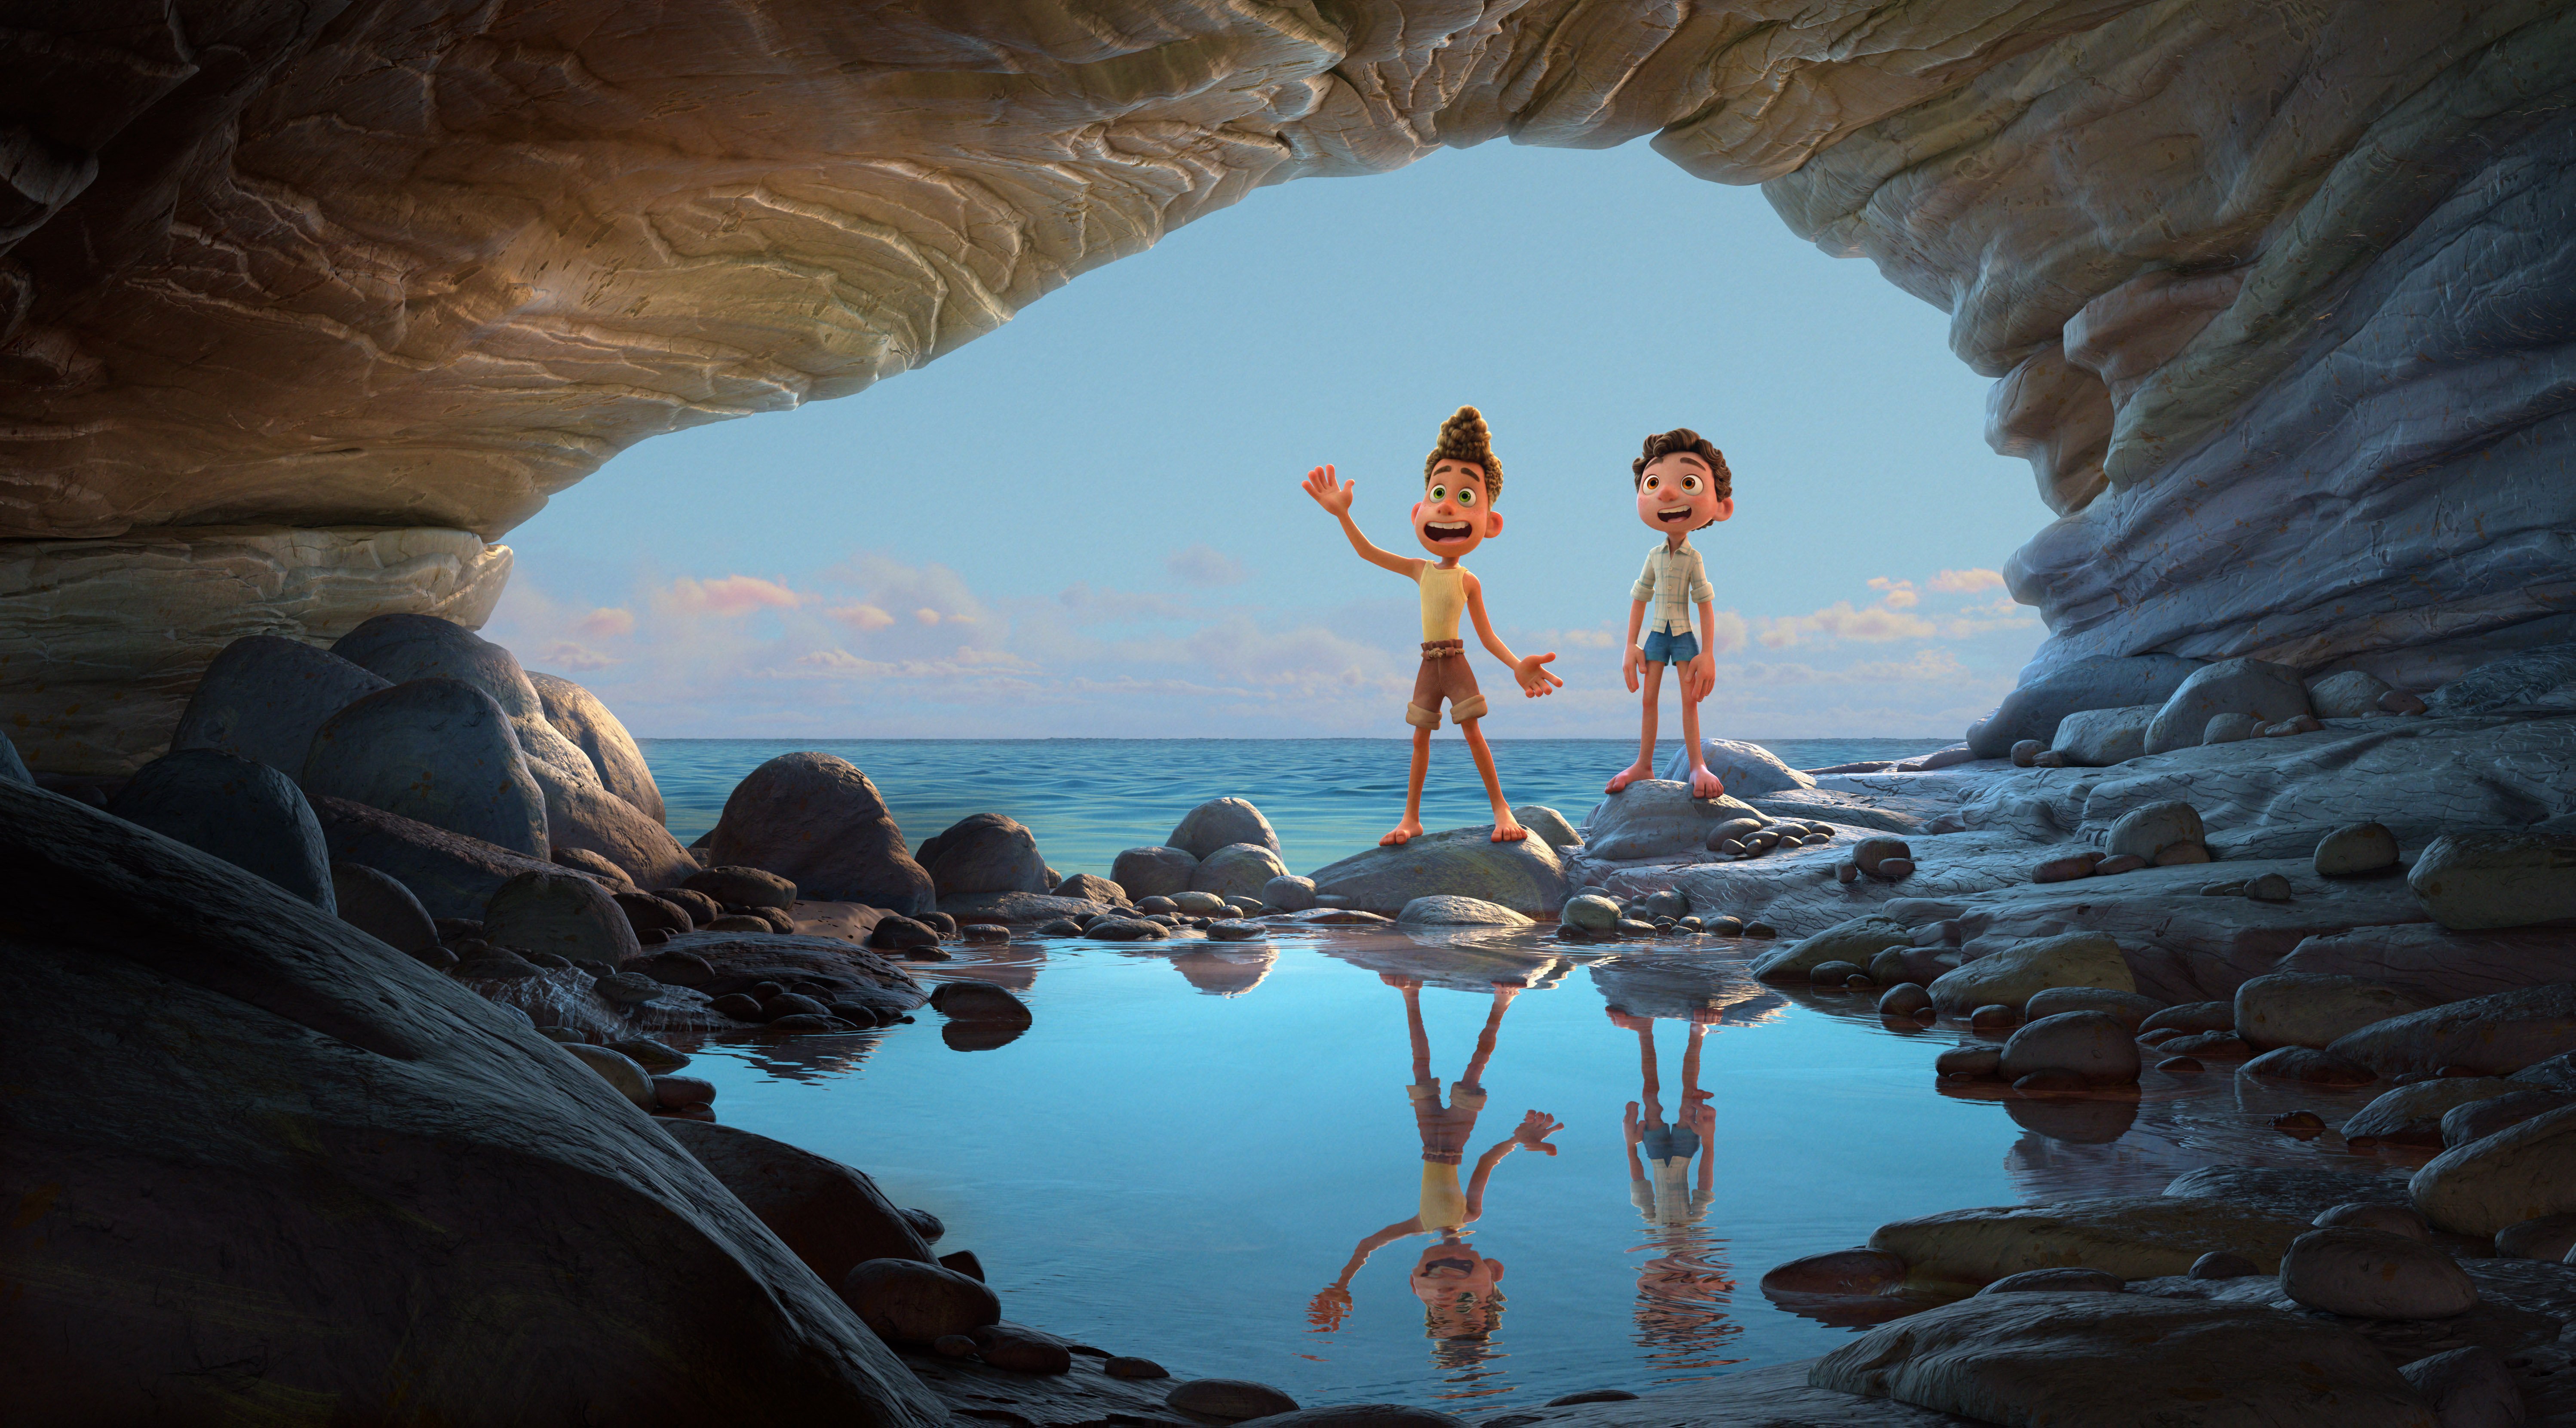 Pixar's Luca: Luca and Alberto emerge from the ocean